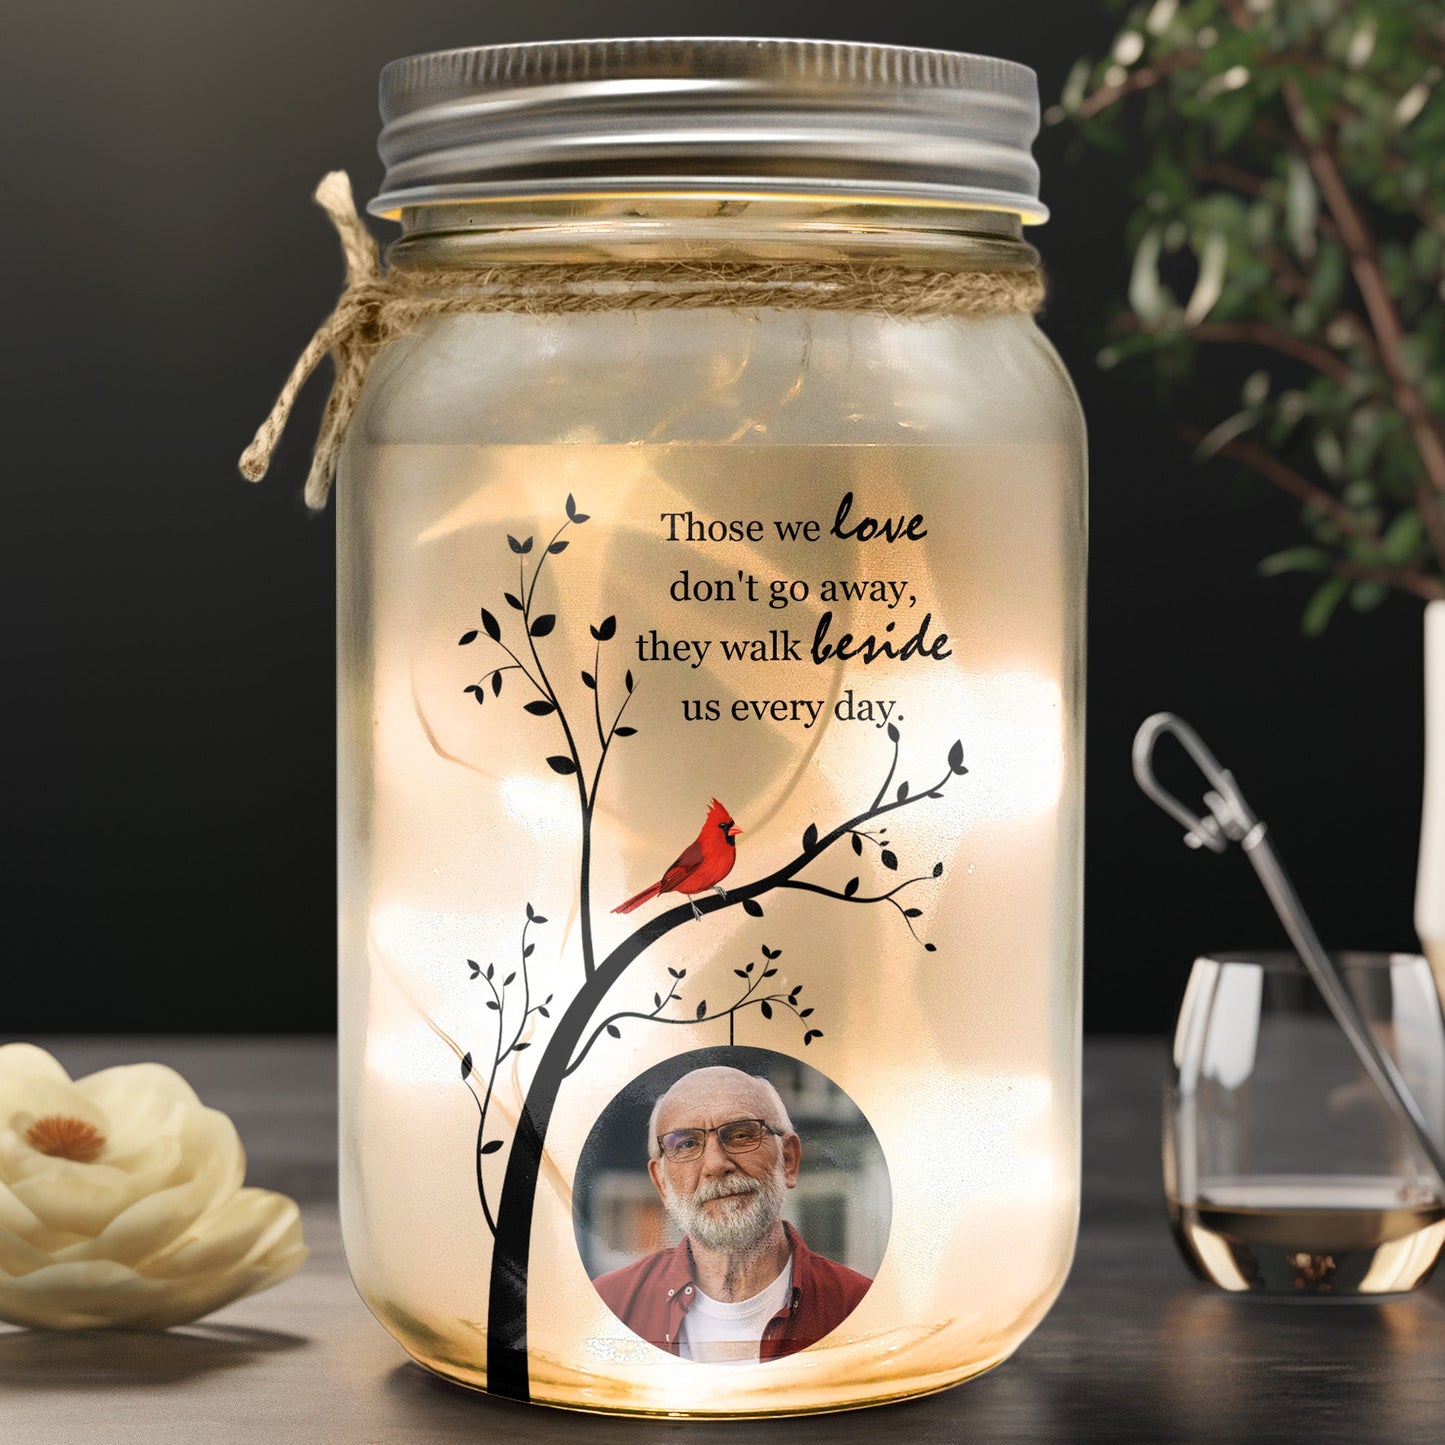 Those We Love Don't Go Away - Personalized Photo Mason Jar Light